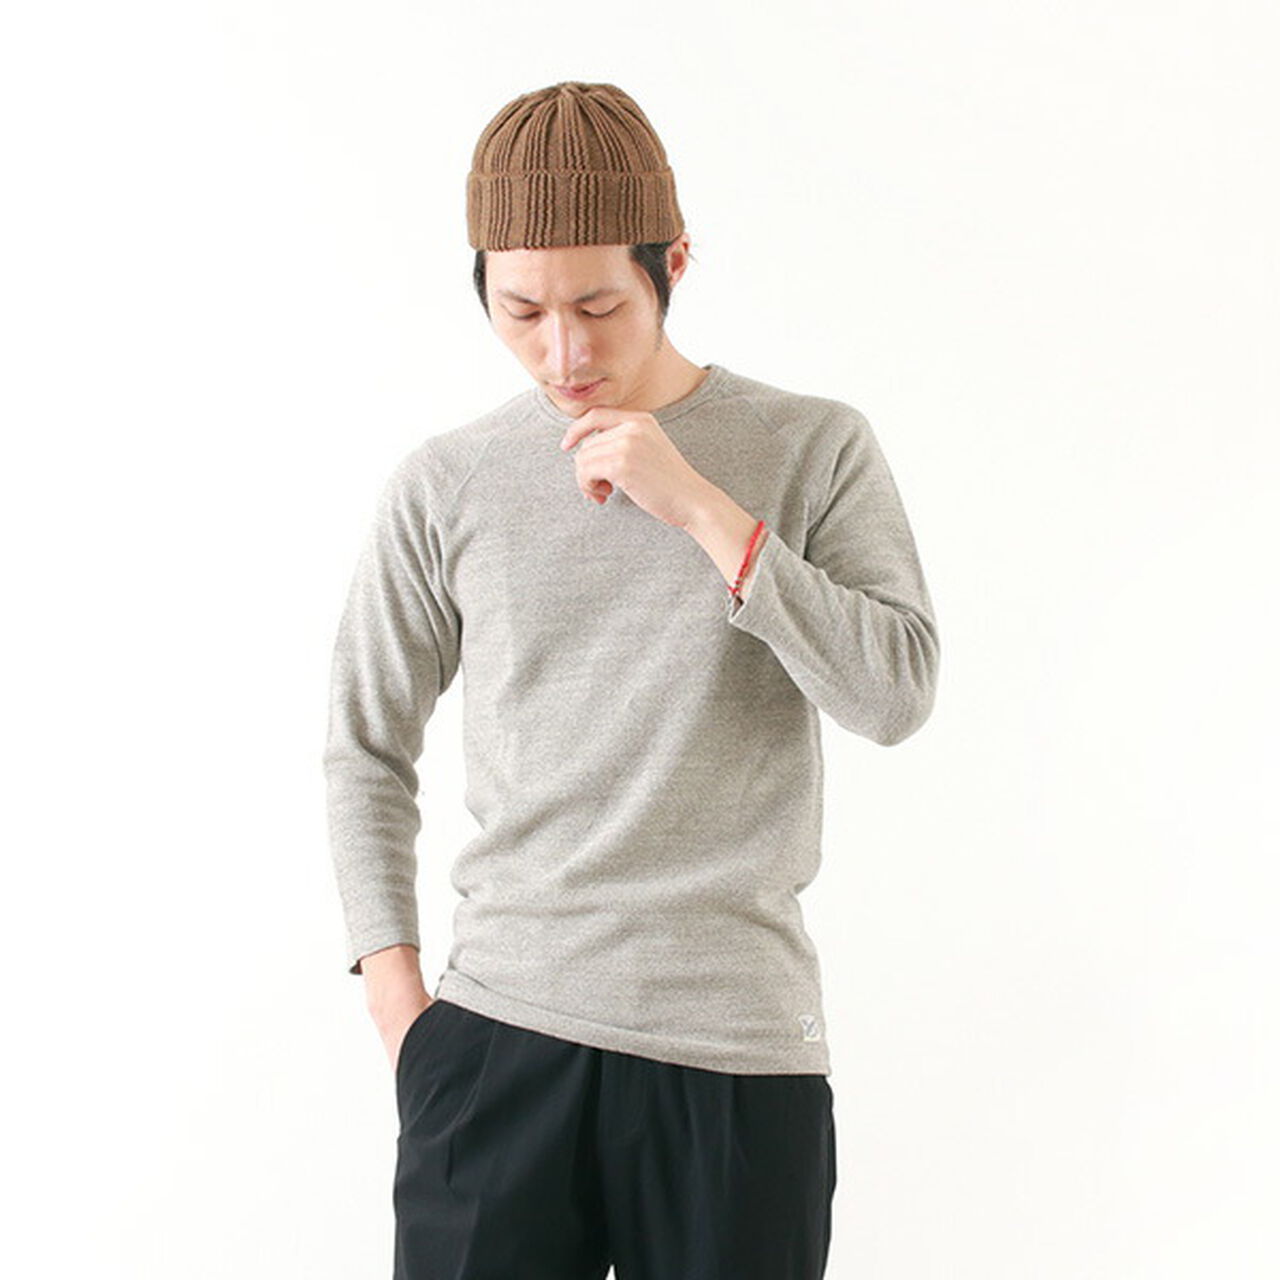 Raffy Spun Milled 7/10 Sleeve T-Shirt,LightGrey, large image number 0